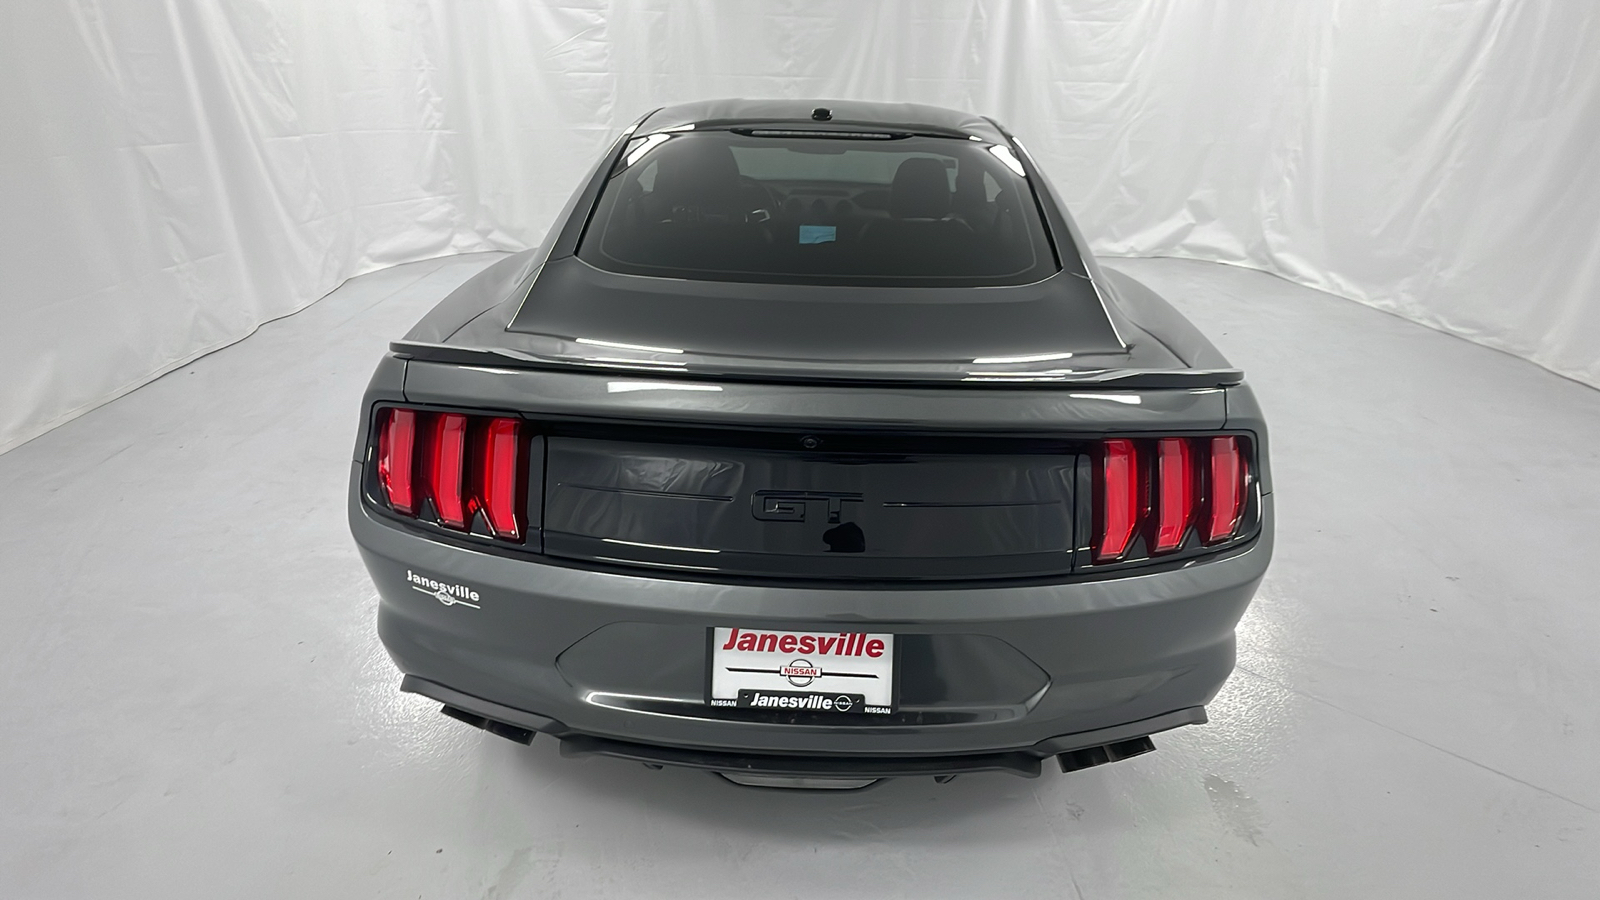 2019 Ford Mustang GT Premium 4